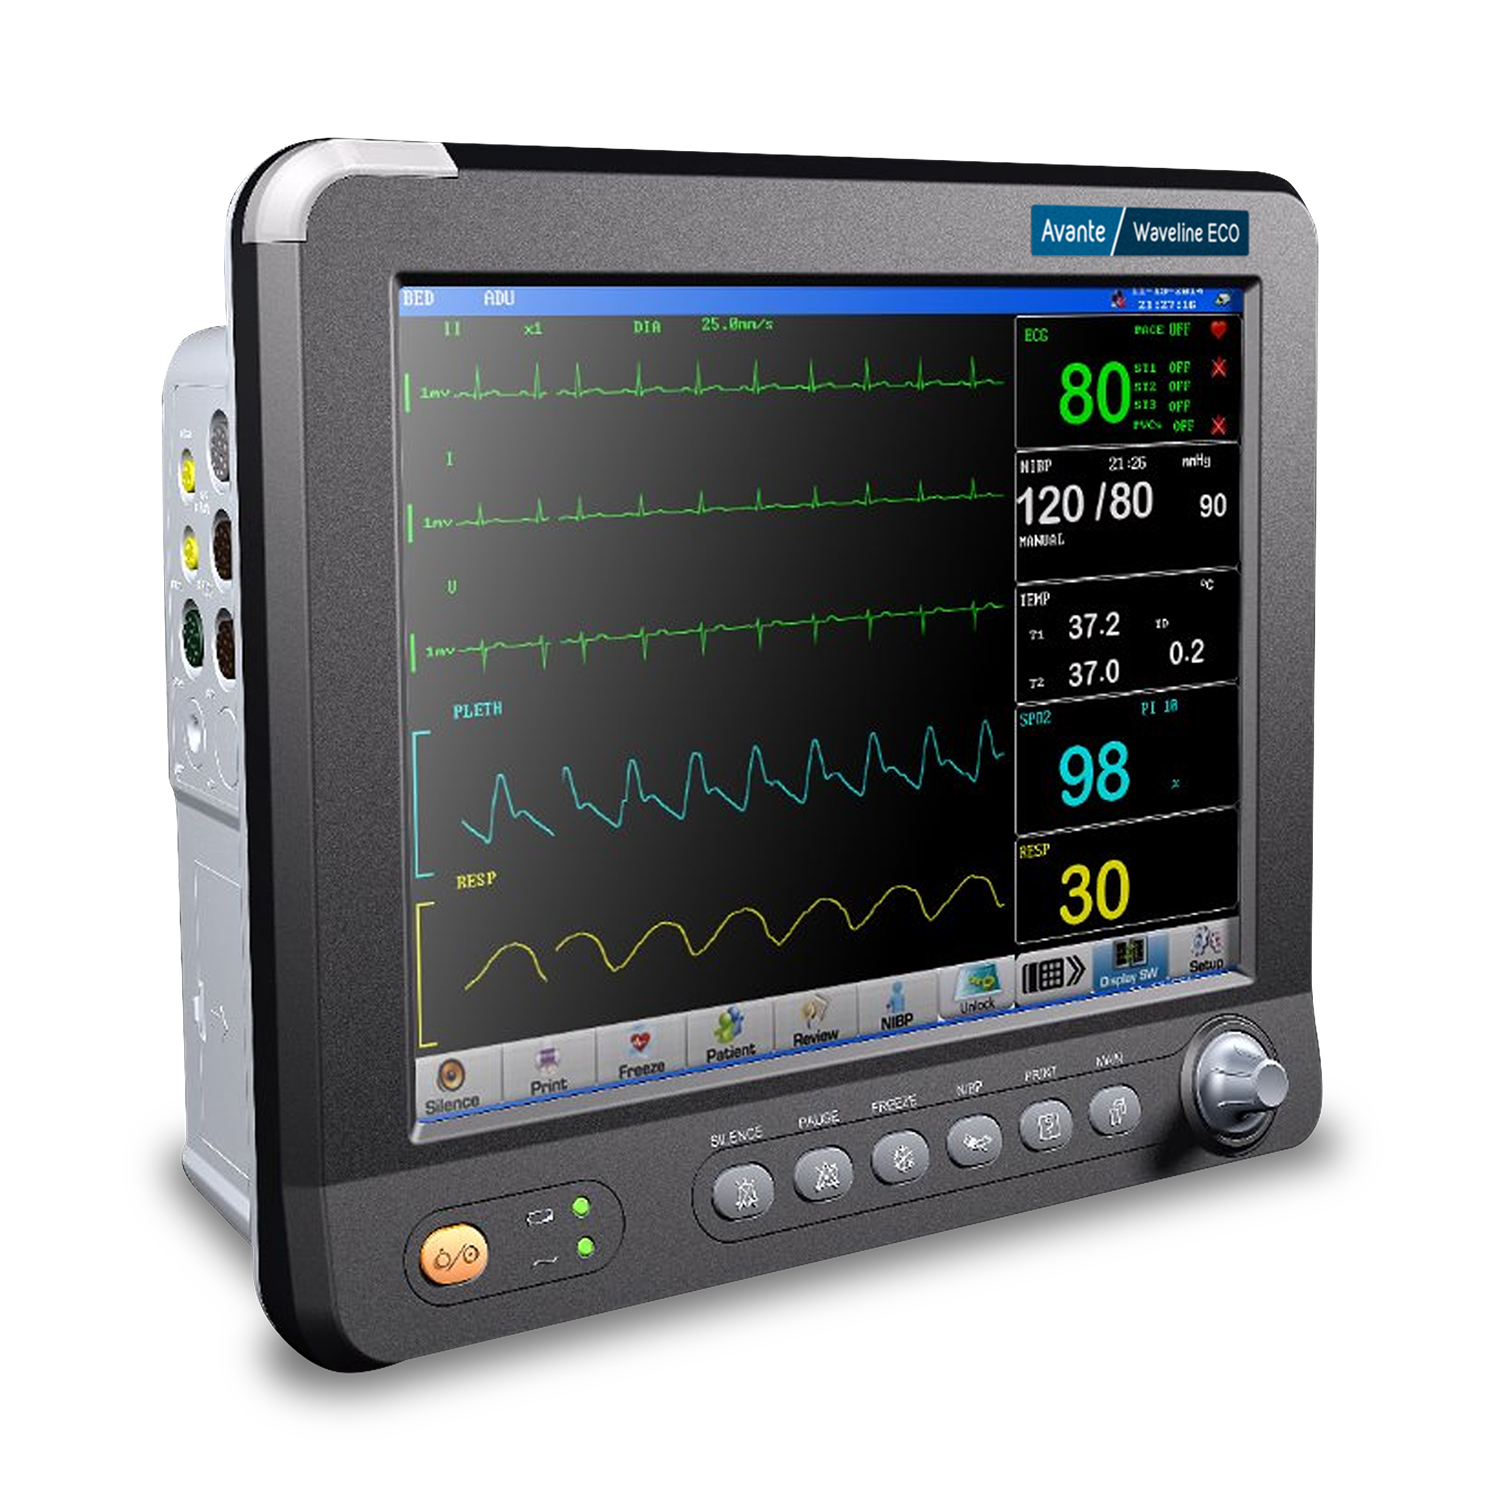 Avante Waveline ECO Patient Monitor